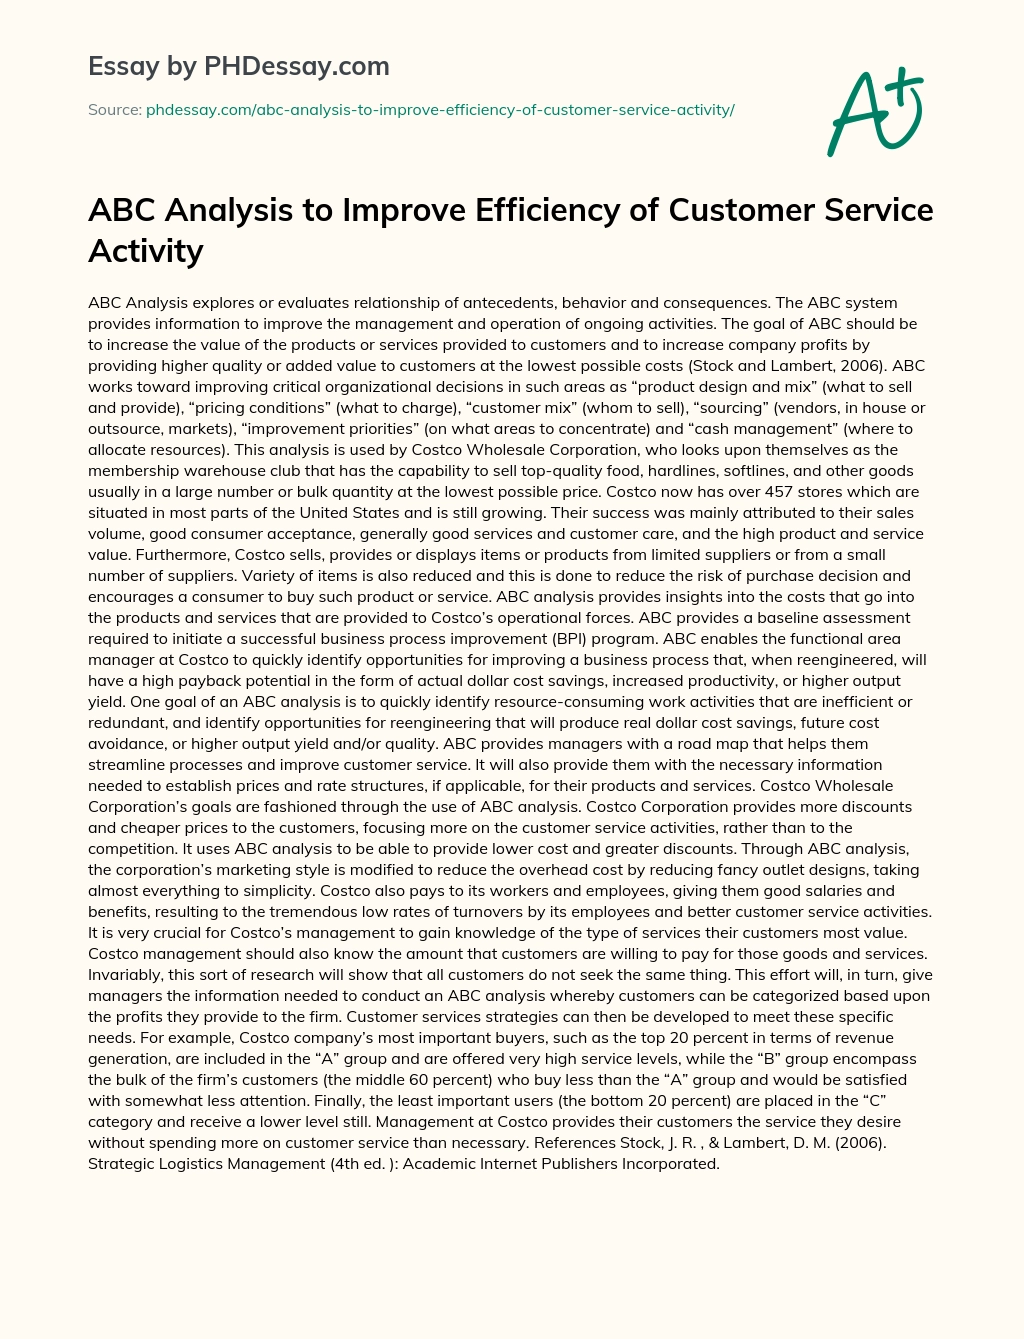 ABC Analysis to Improve Efficiency  of Customer Service Activity essay